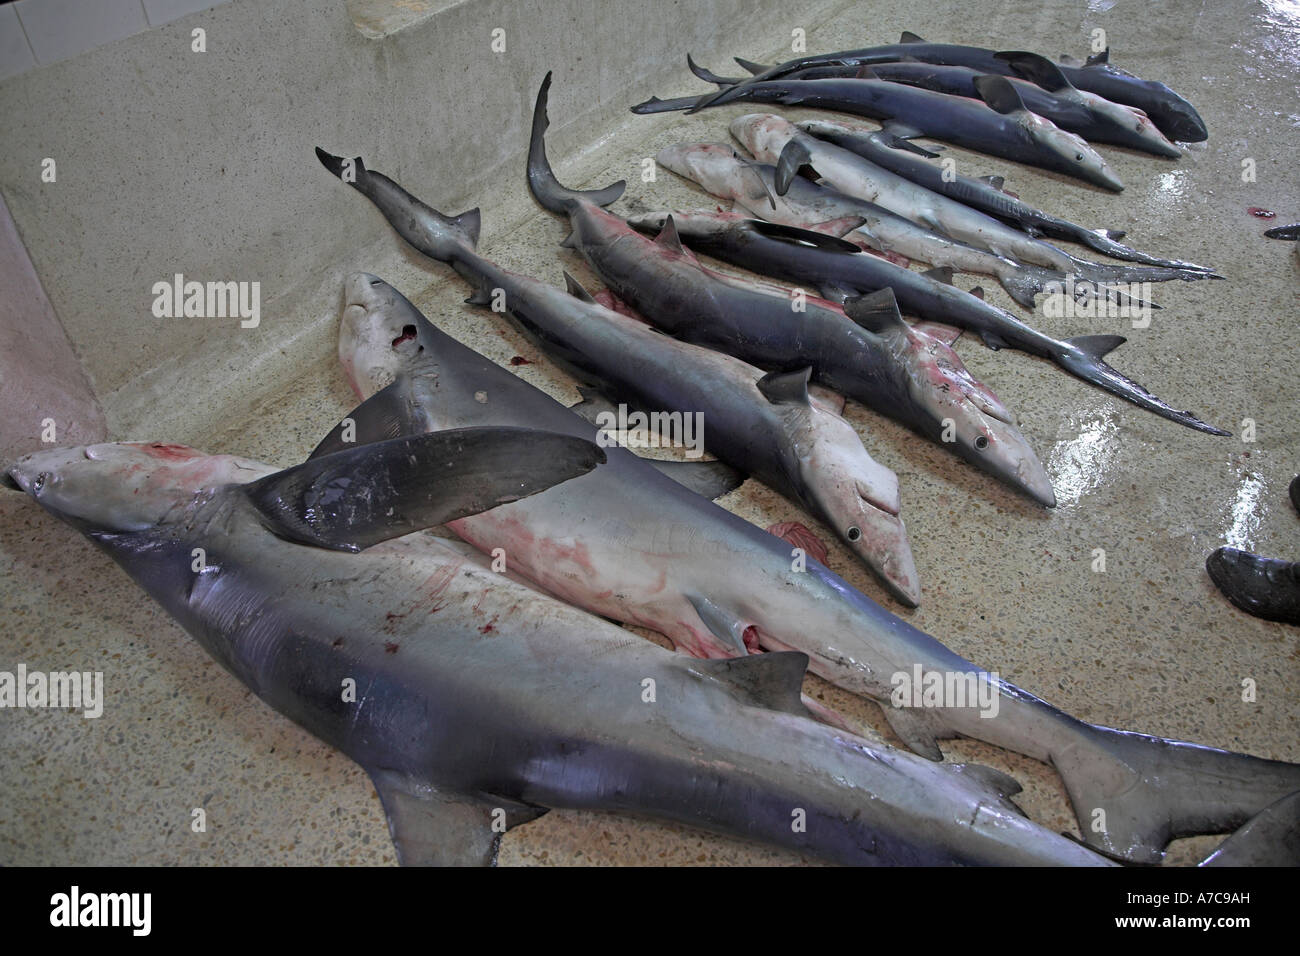 Morocco shark sharks fishing -Fotos und -Bildmaterial in hoher Auflösung –  Alamy